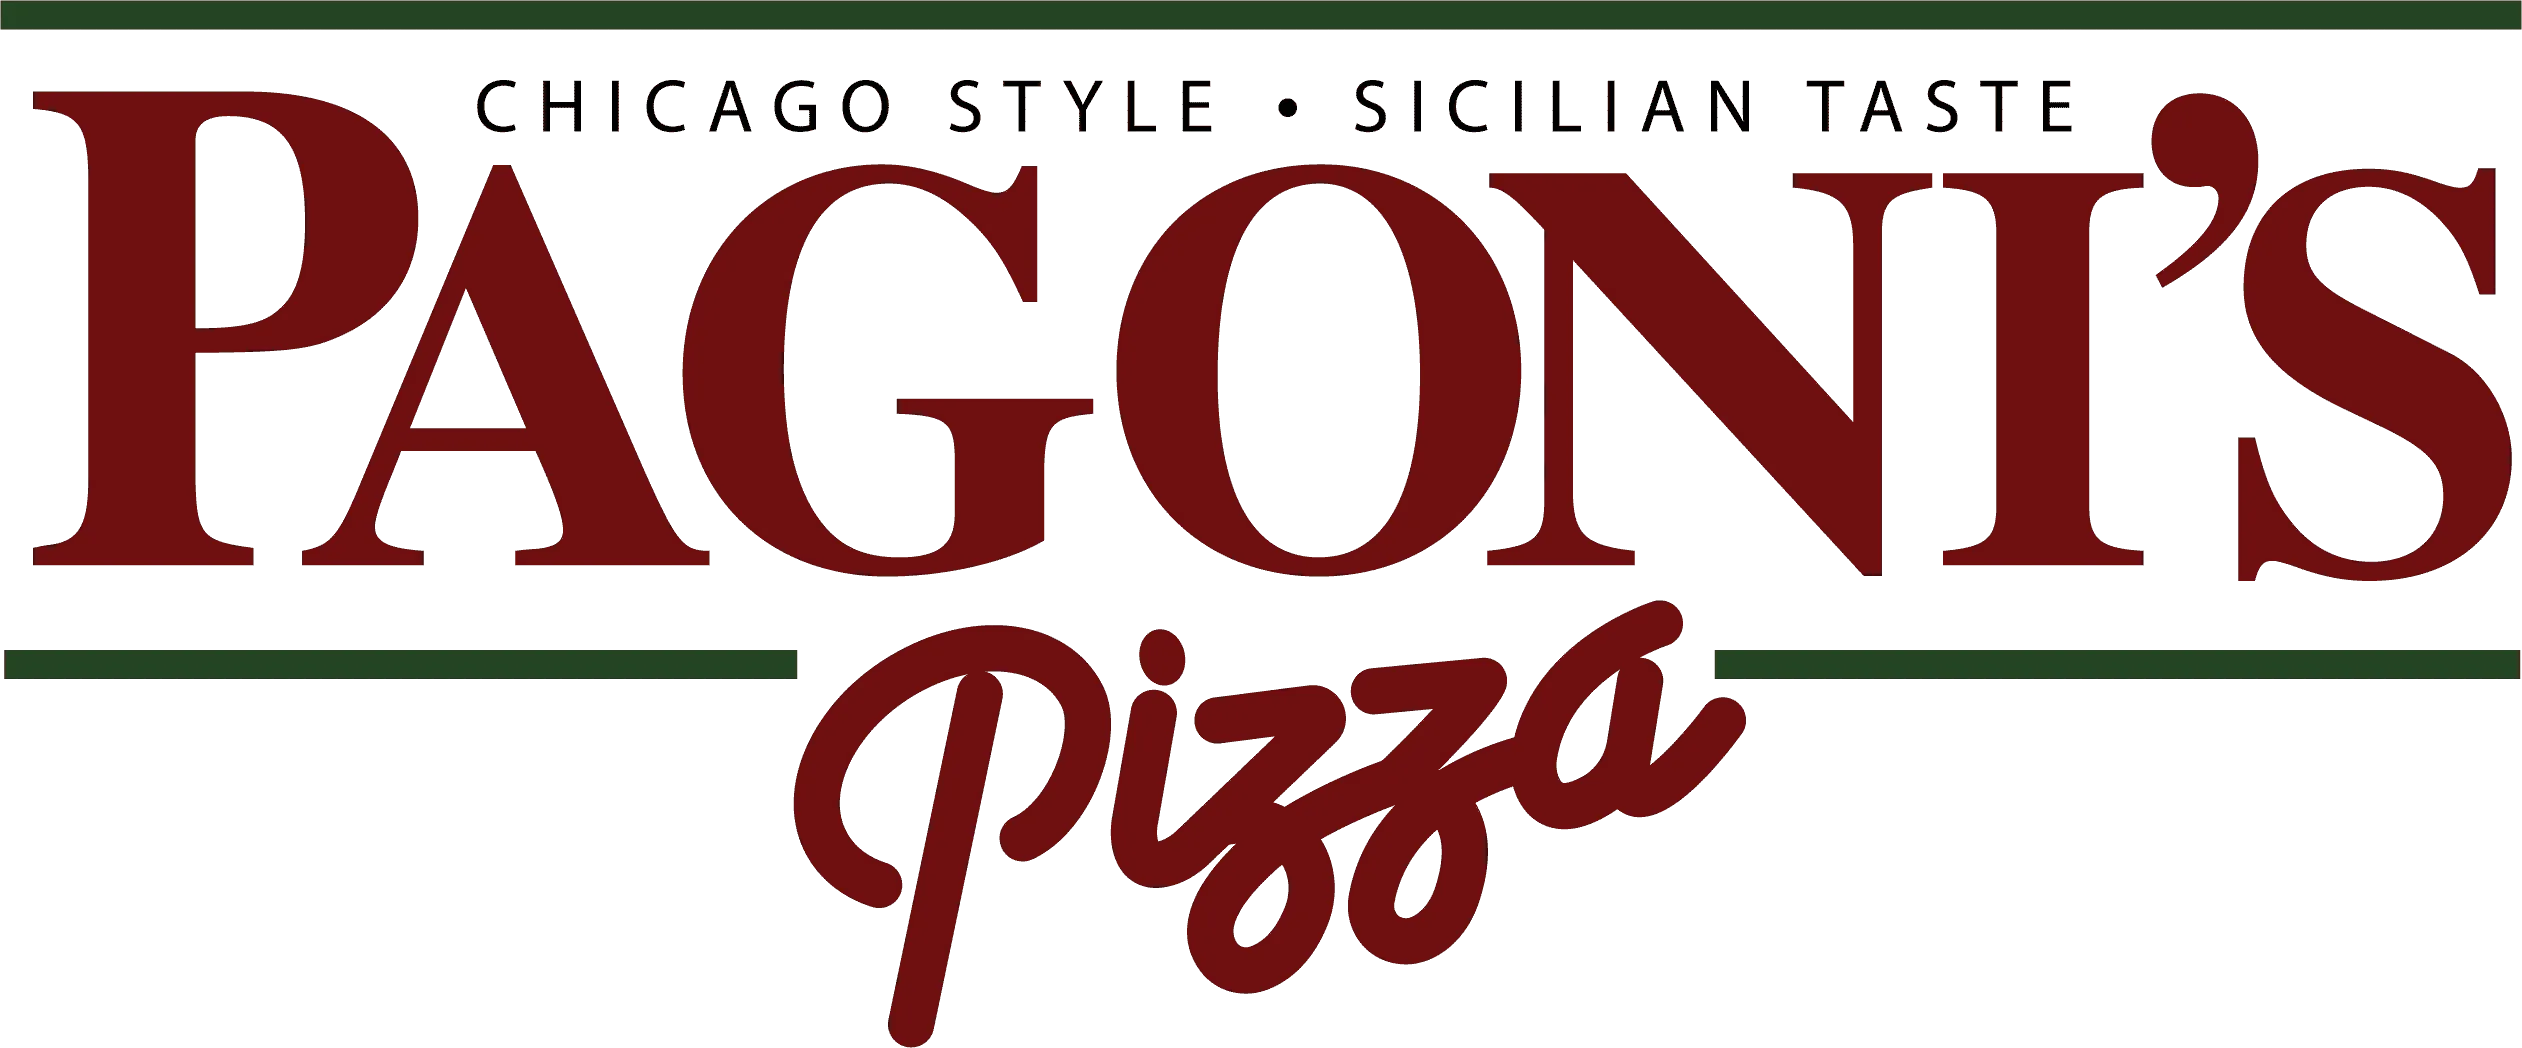 Pagoni's Pizza